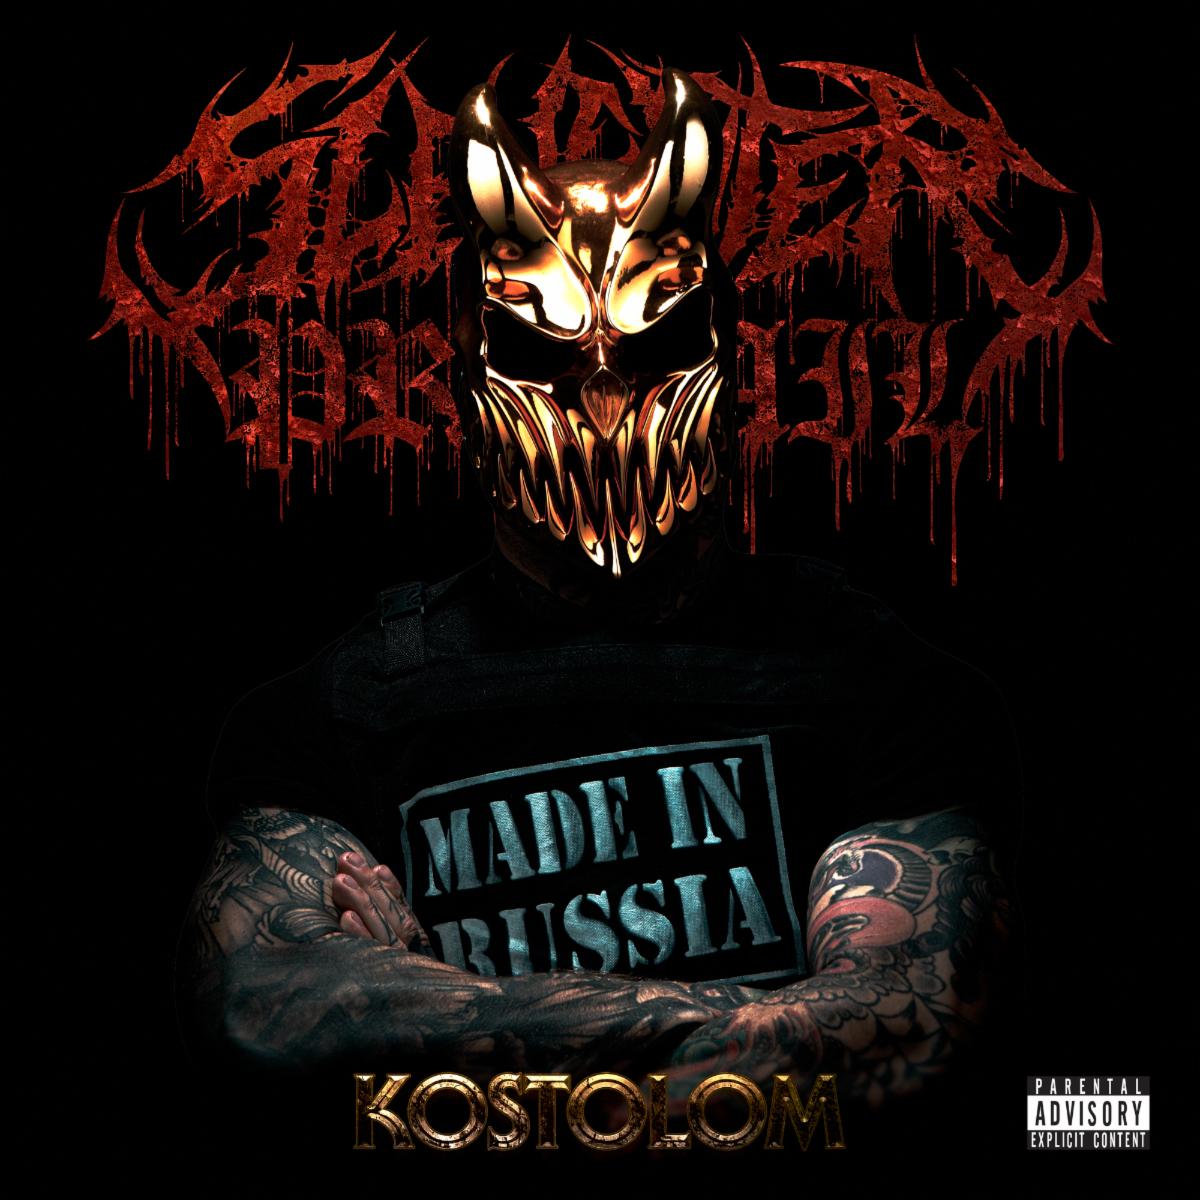 SLAUGHTER TO PREVAIL Announce New Album, 'Kostolom'!